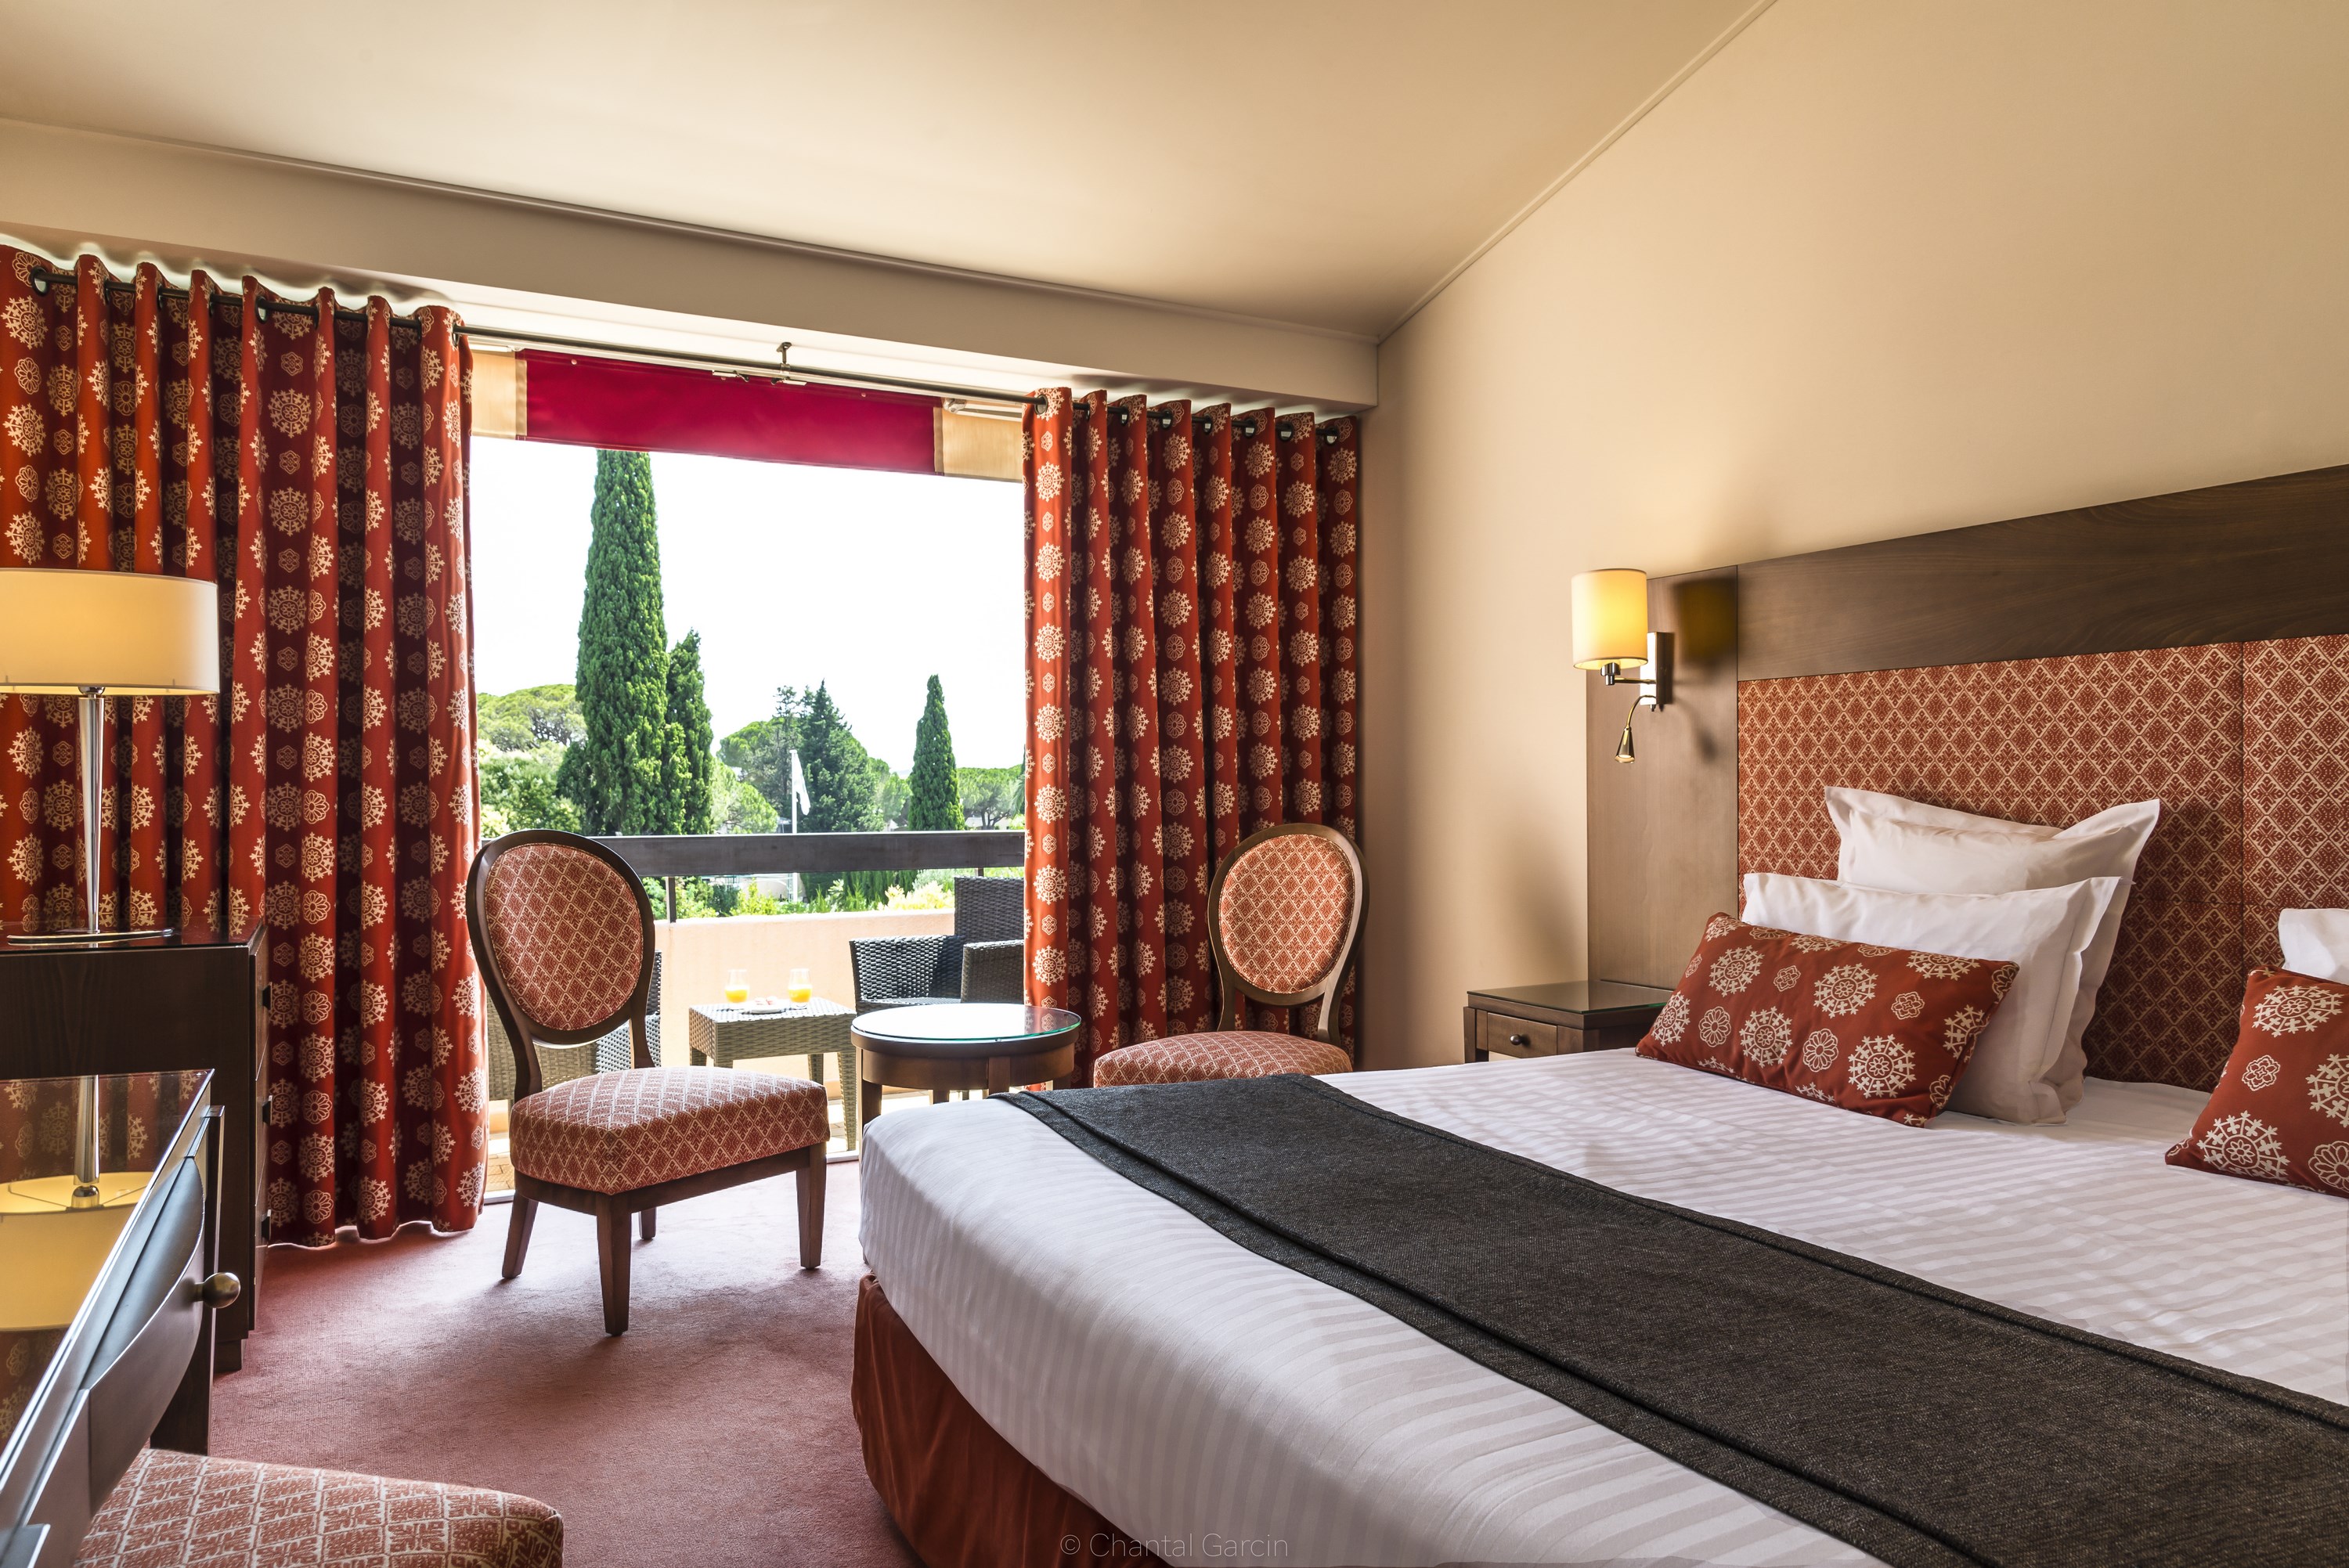 golf-expedition-golf-reizen-frankrijk-regio-cote-d'azur-golf-hotel-de-valescure-stijlvol-ingerichte-slaapkamer-met-balkon